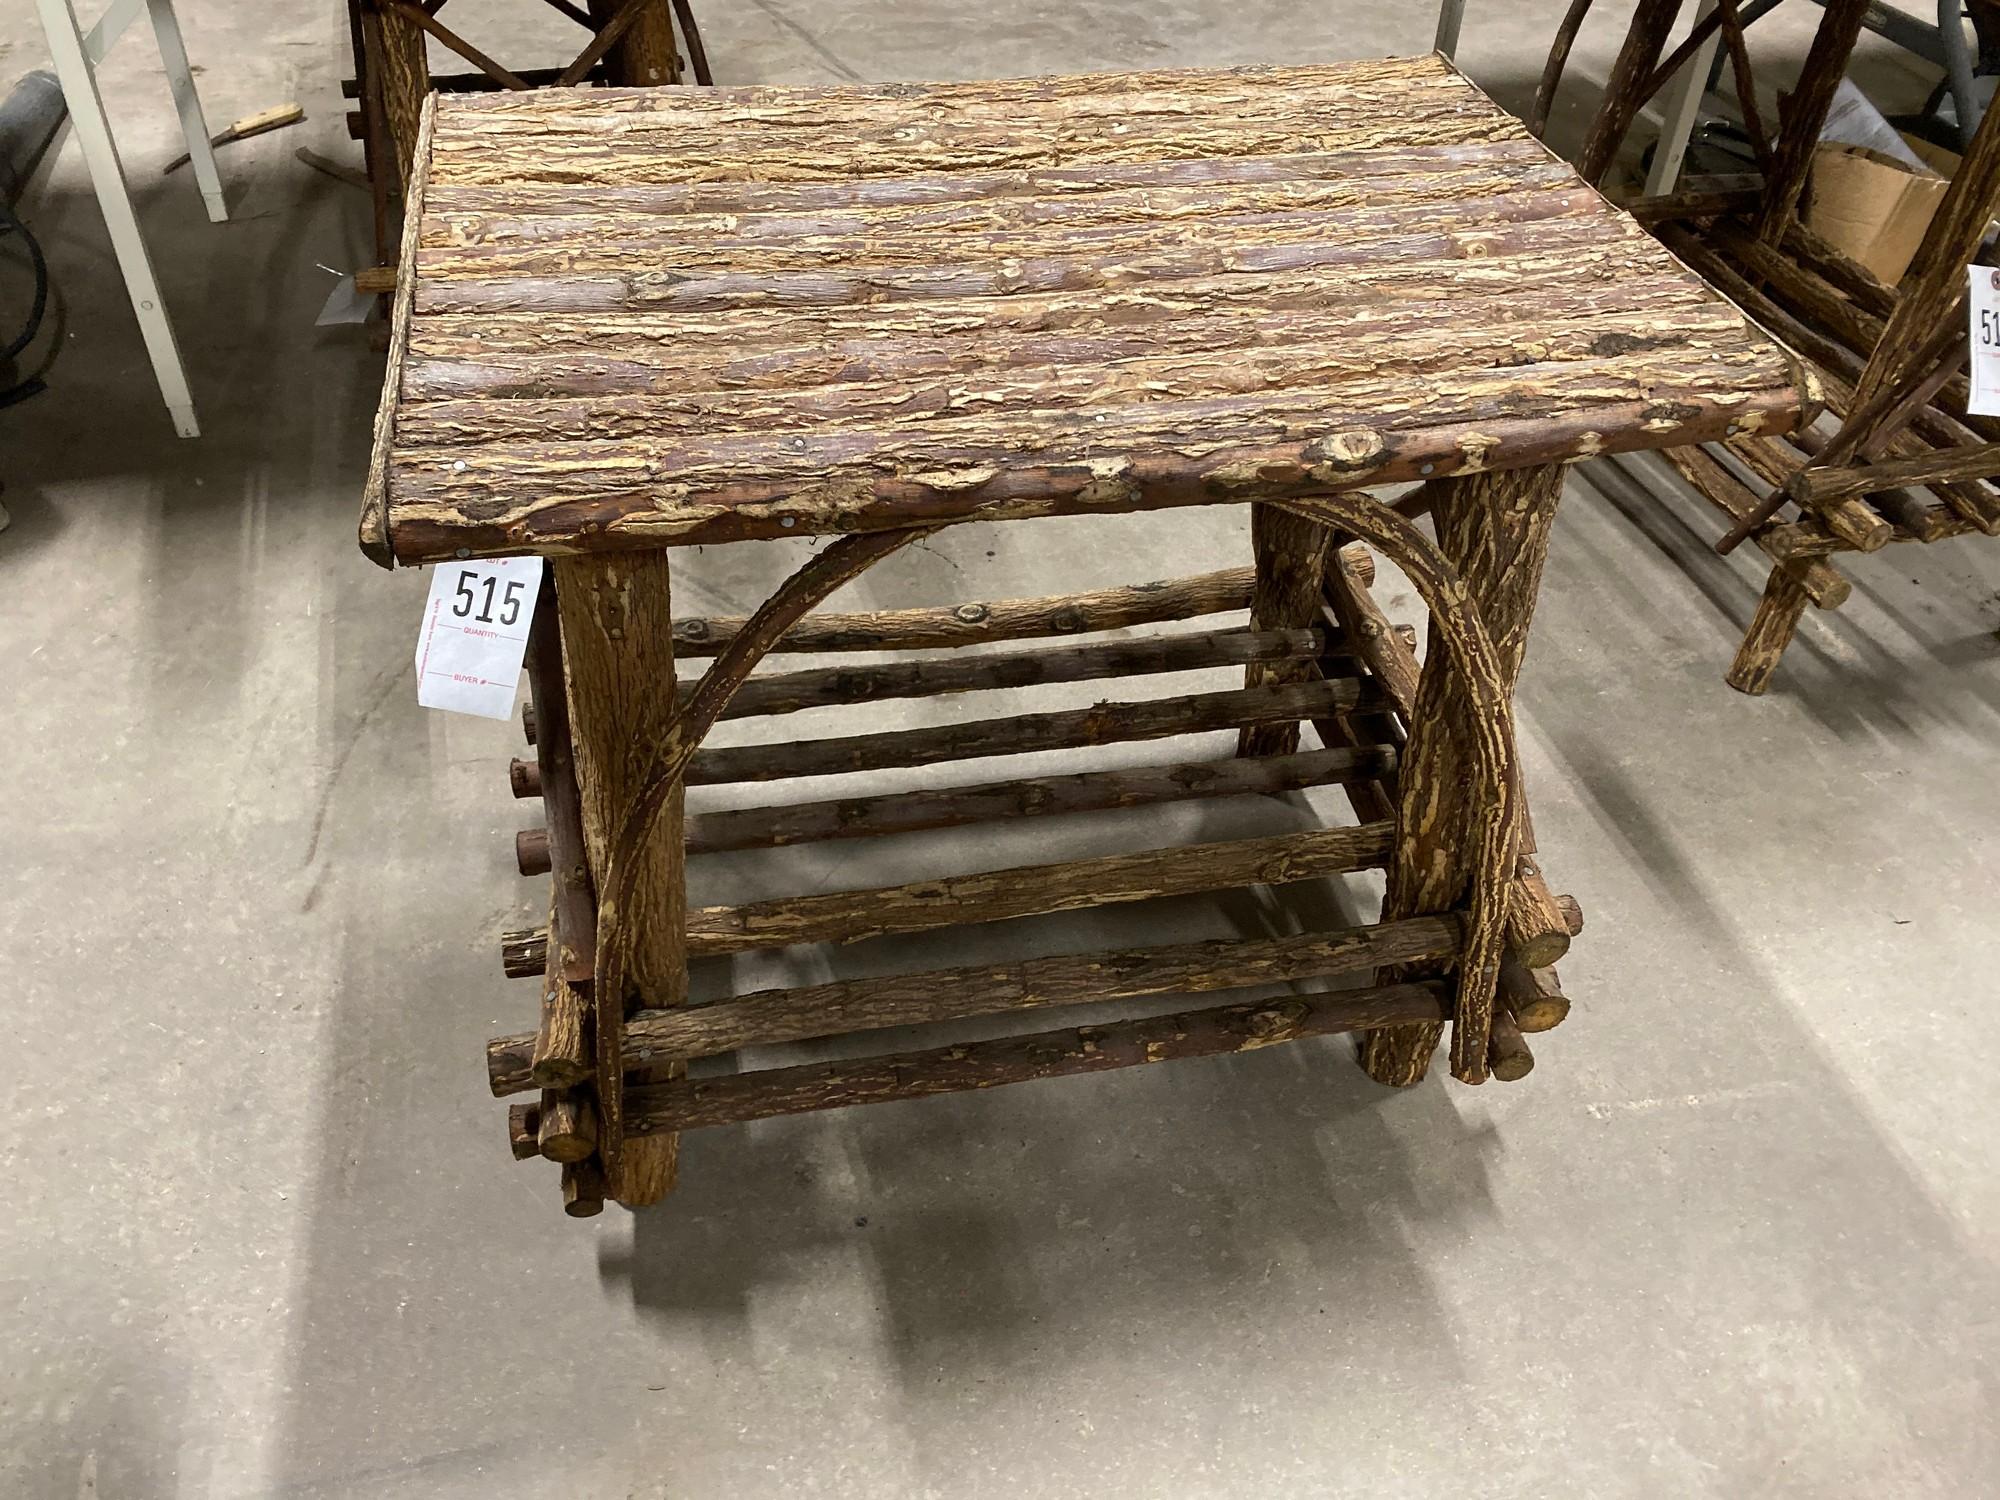 Handmade table